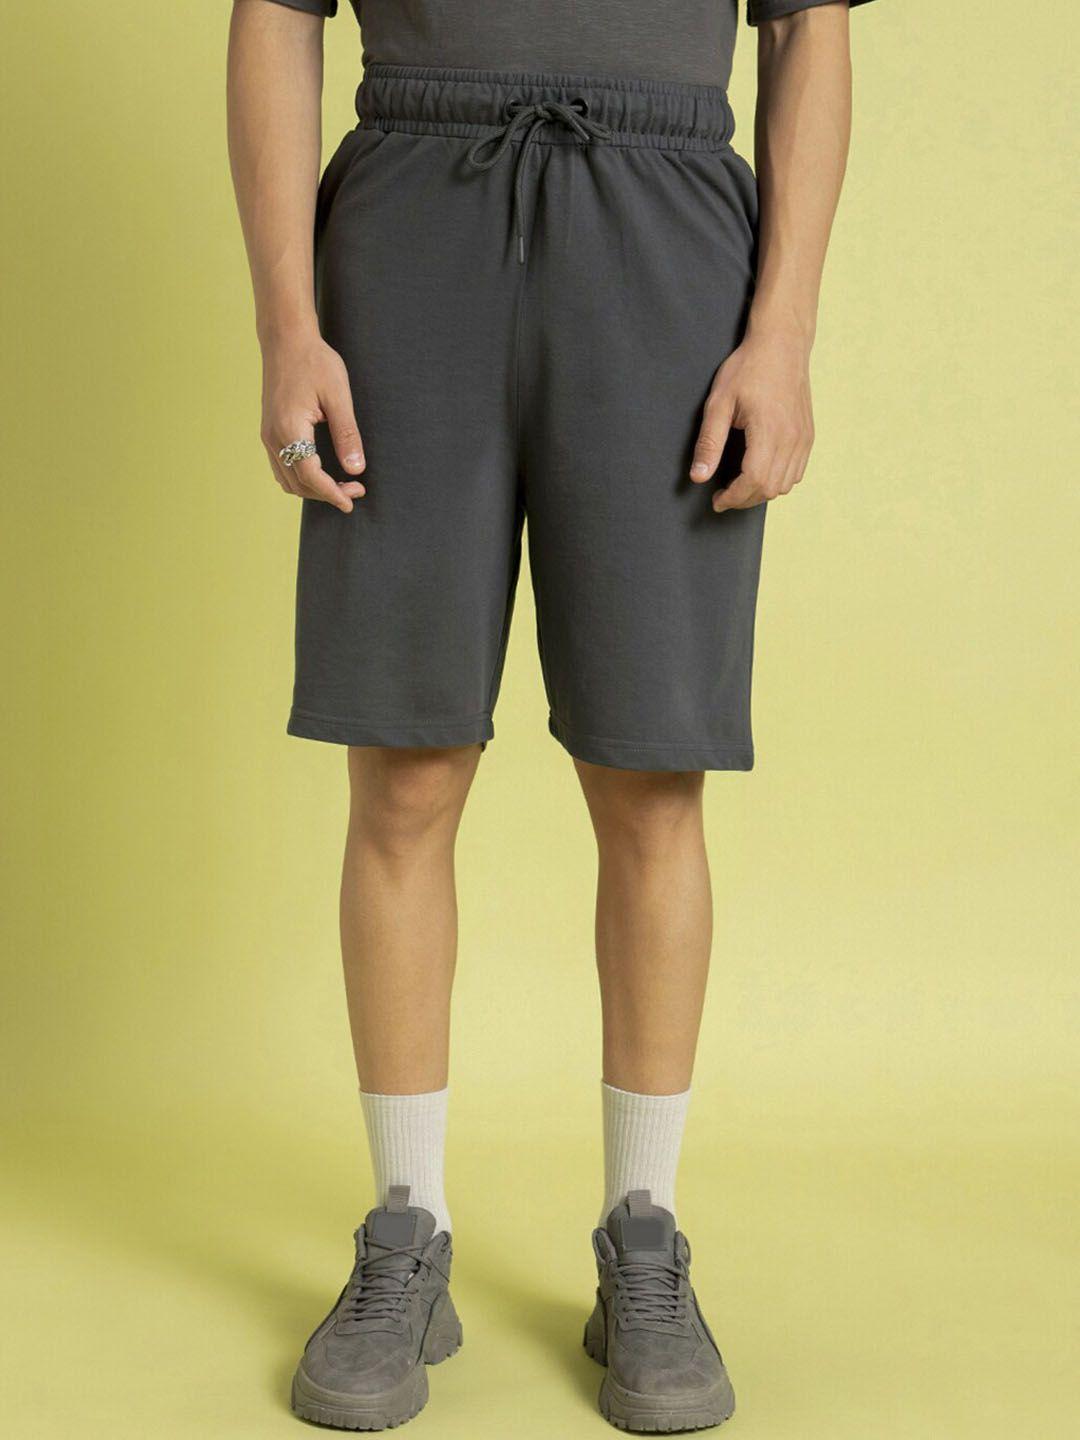 bewakoof-men-grey-mid-rise-shorts